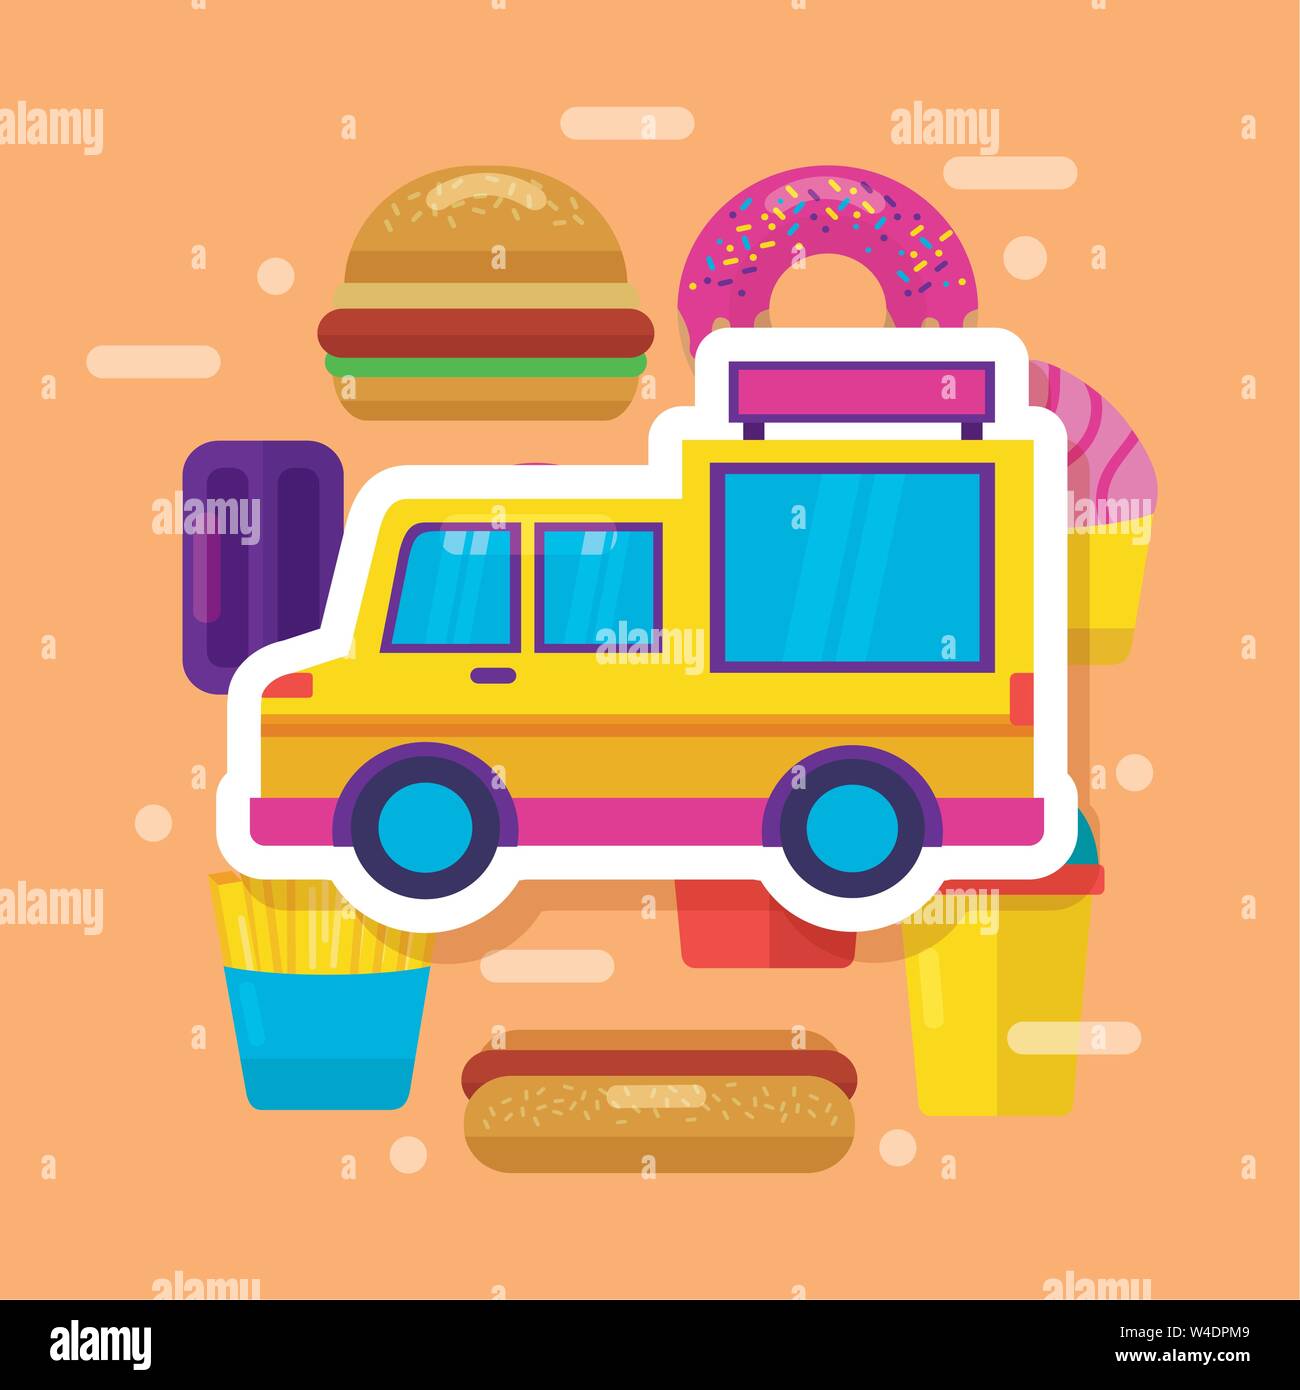 food trucks flat design image Stock Vector